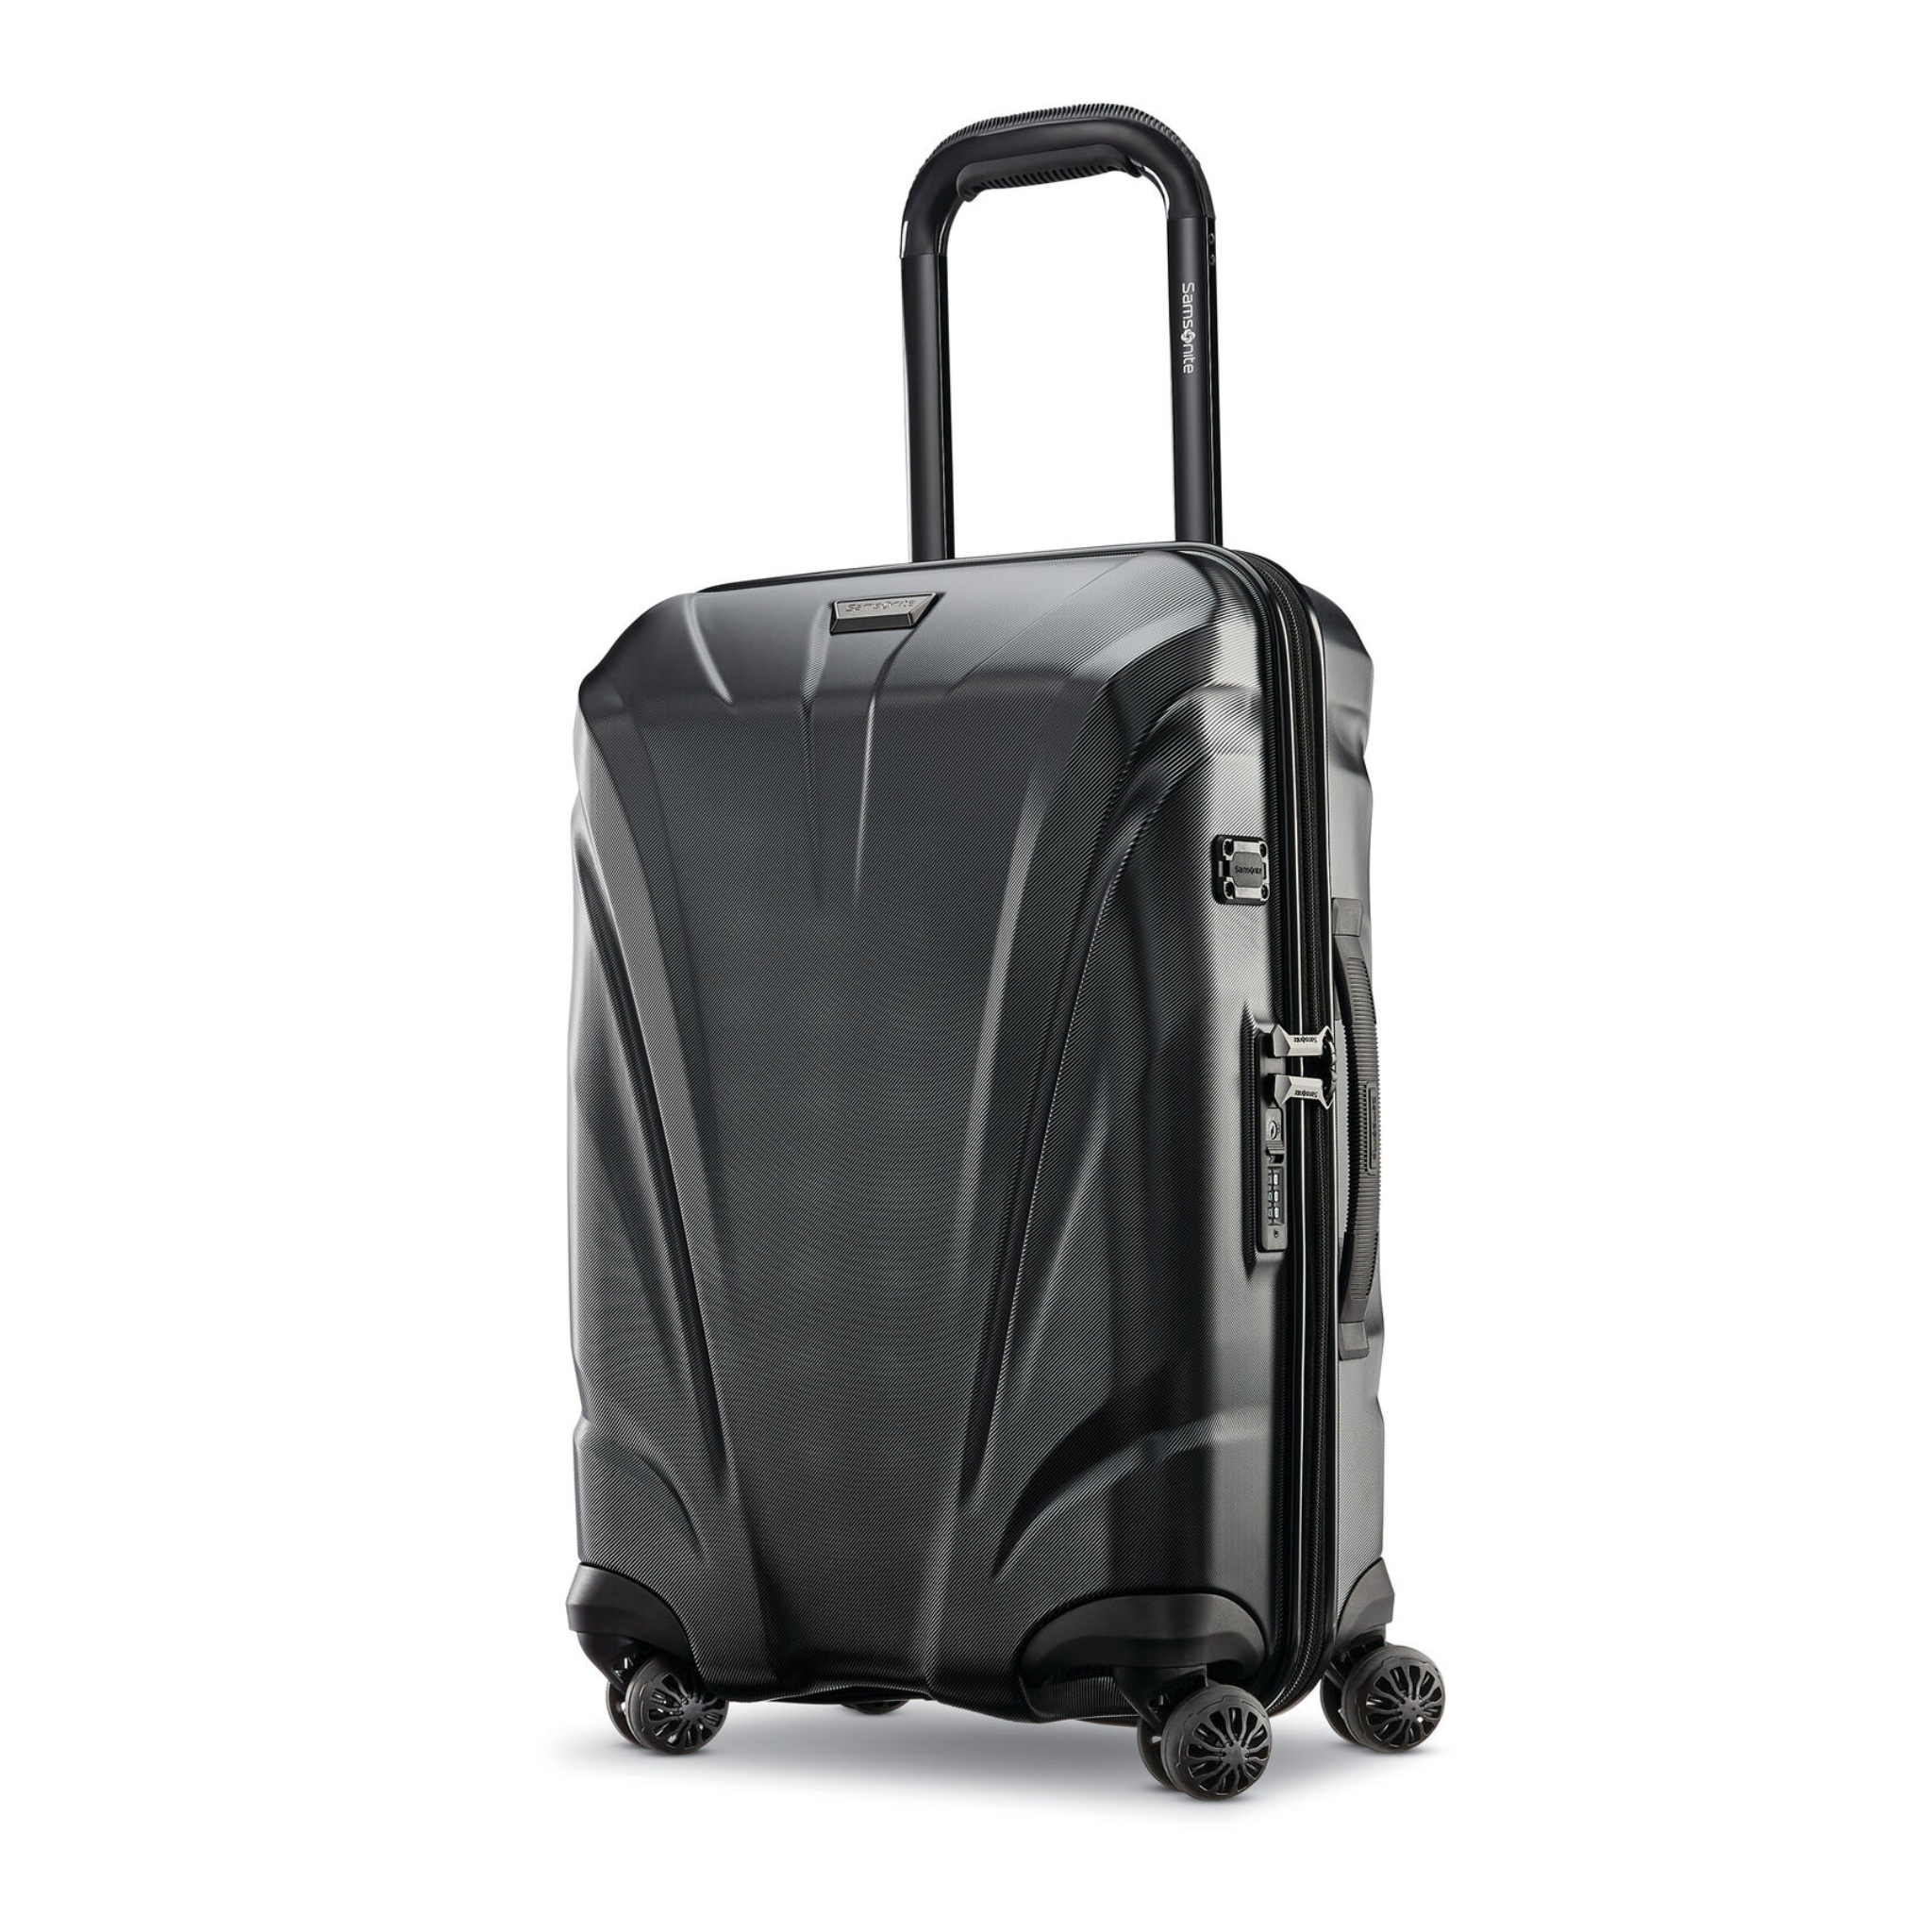 20" Samsonite Xcalibur Carry-On Hardside Luggage w/ Spinners